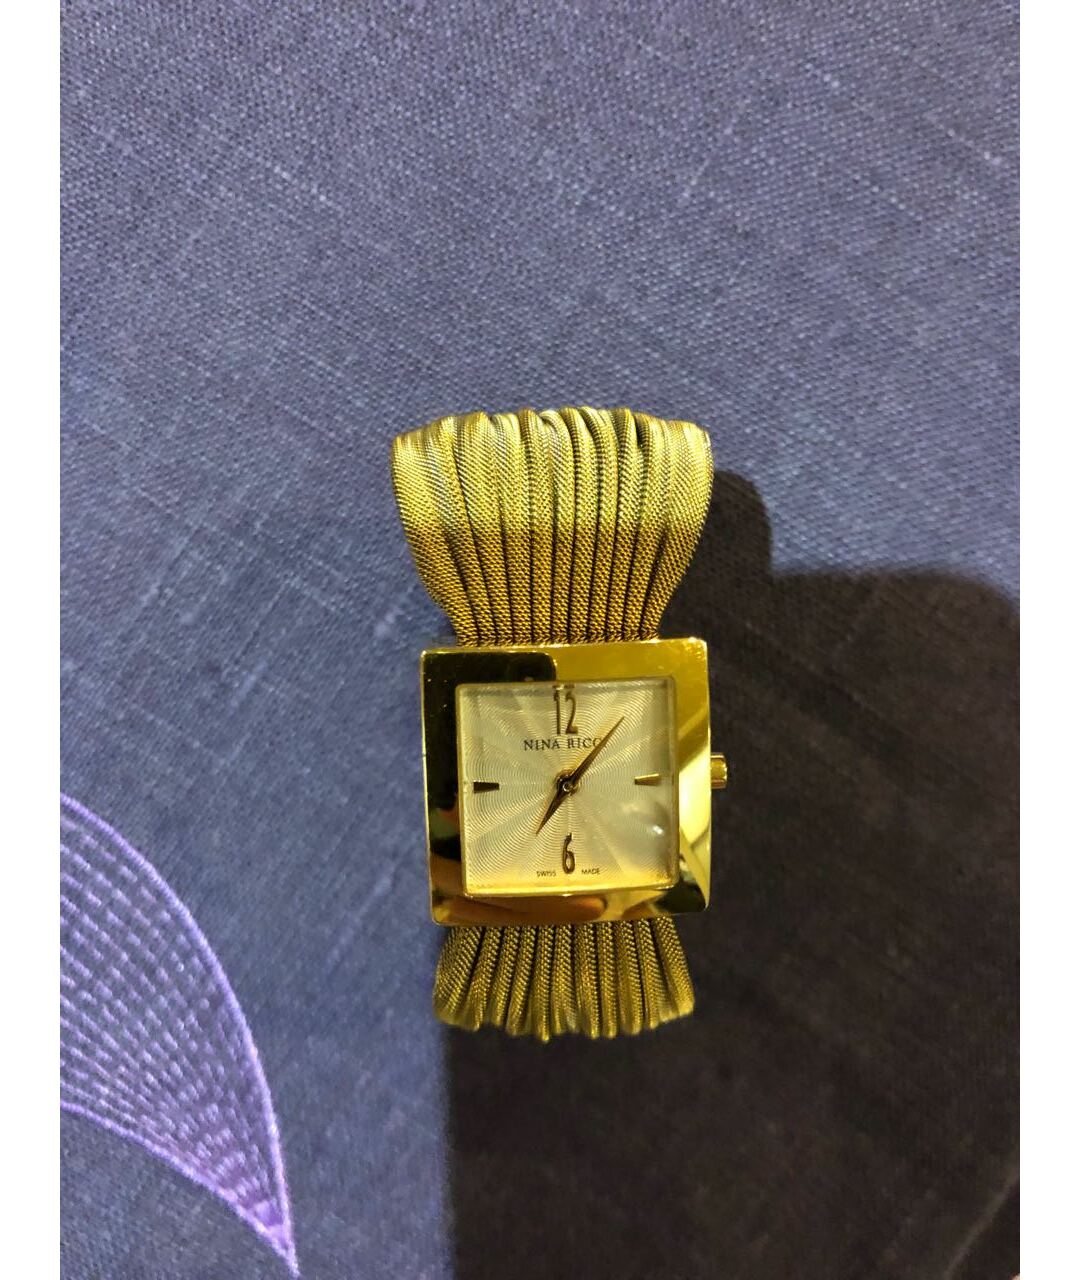 NINA RICCI Золотые часы, фото 2